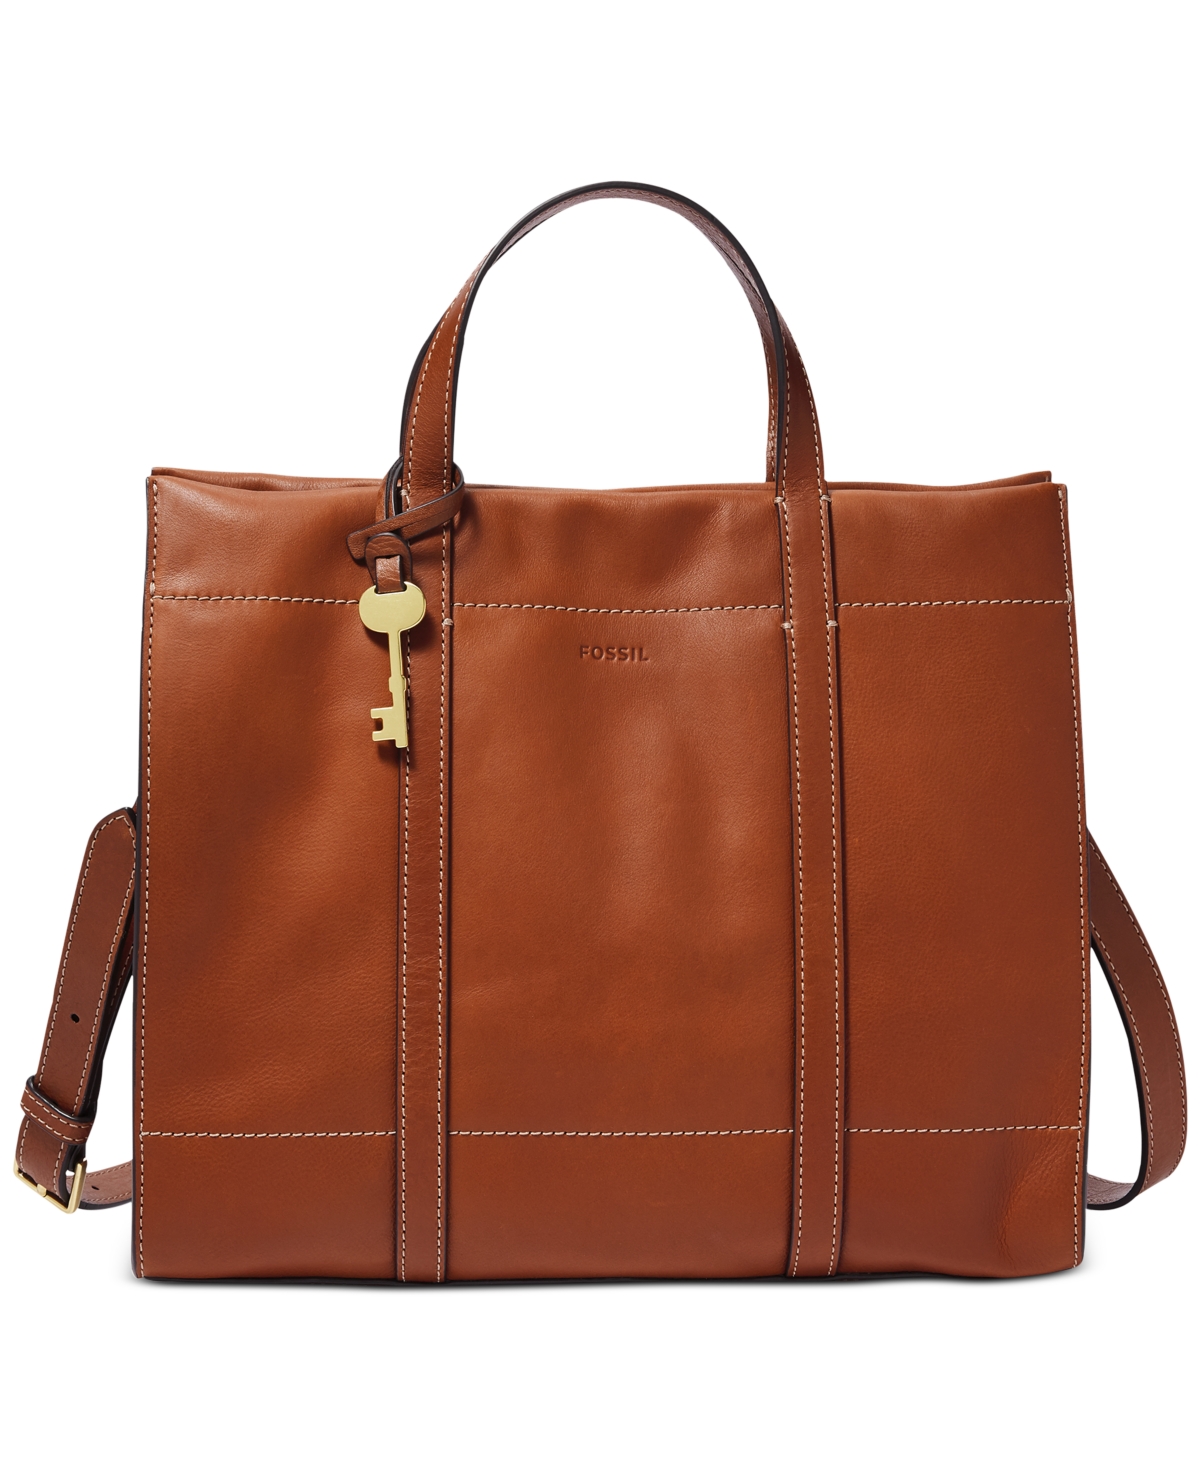 Fossil Carmen Leather Shopper & Reviews - Handbags & Accessories - Macy's